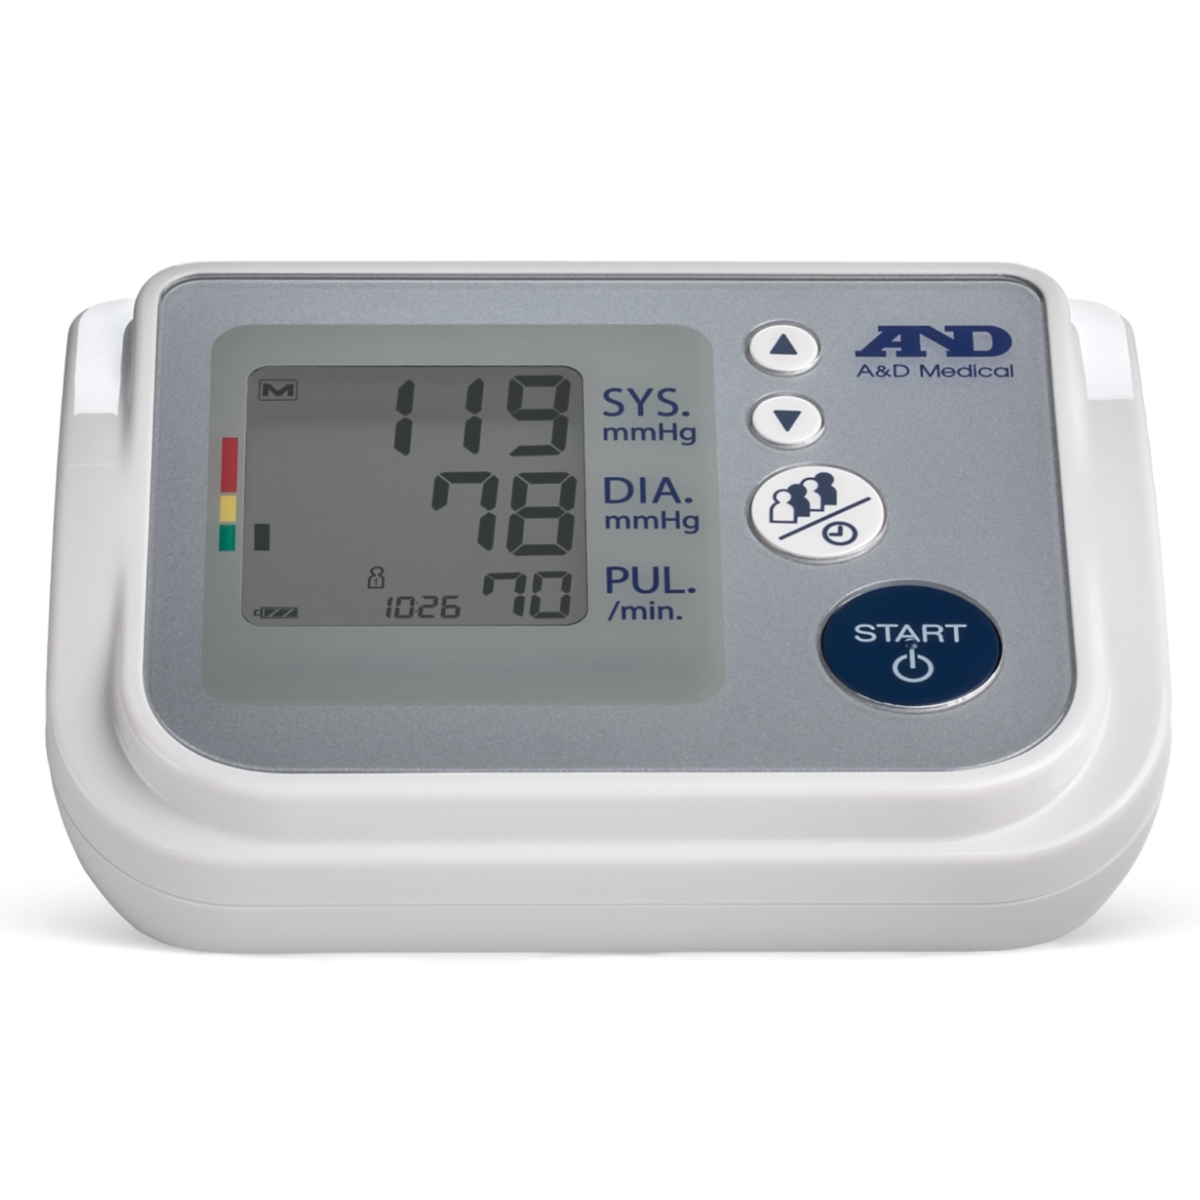 https://www.3bscientific.com/thumblibrary/W64603/W64603_01_1200_1200_One-Step-Auto-Inflate-Plus-Memory-Medium-Cuff-Blood-Pressure-Monitor.jpg